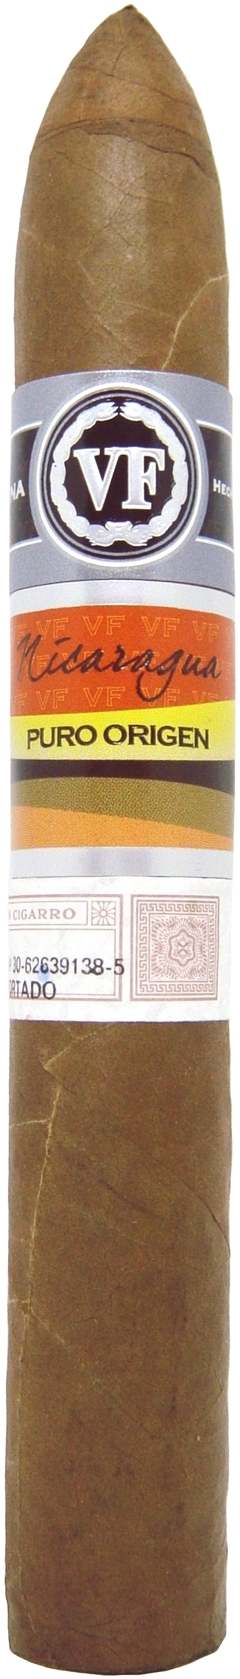 VegaFina Limited Edition Puro Origen Gran Piramide x10 Nicaragua - comprar online